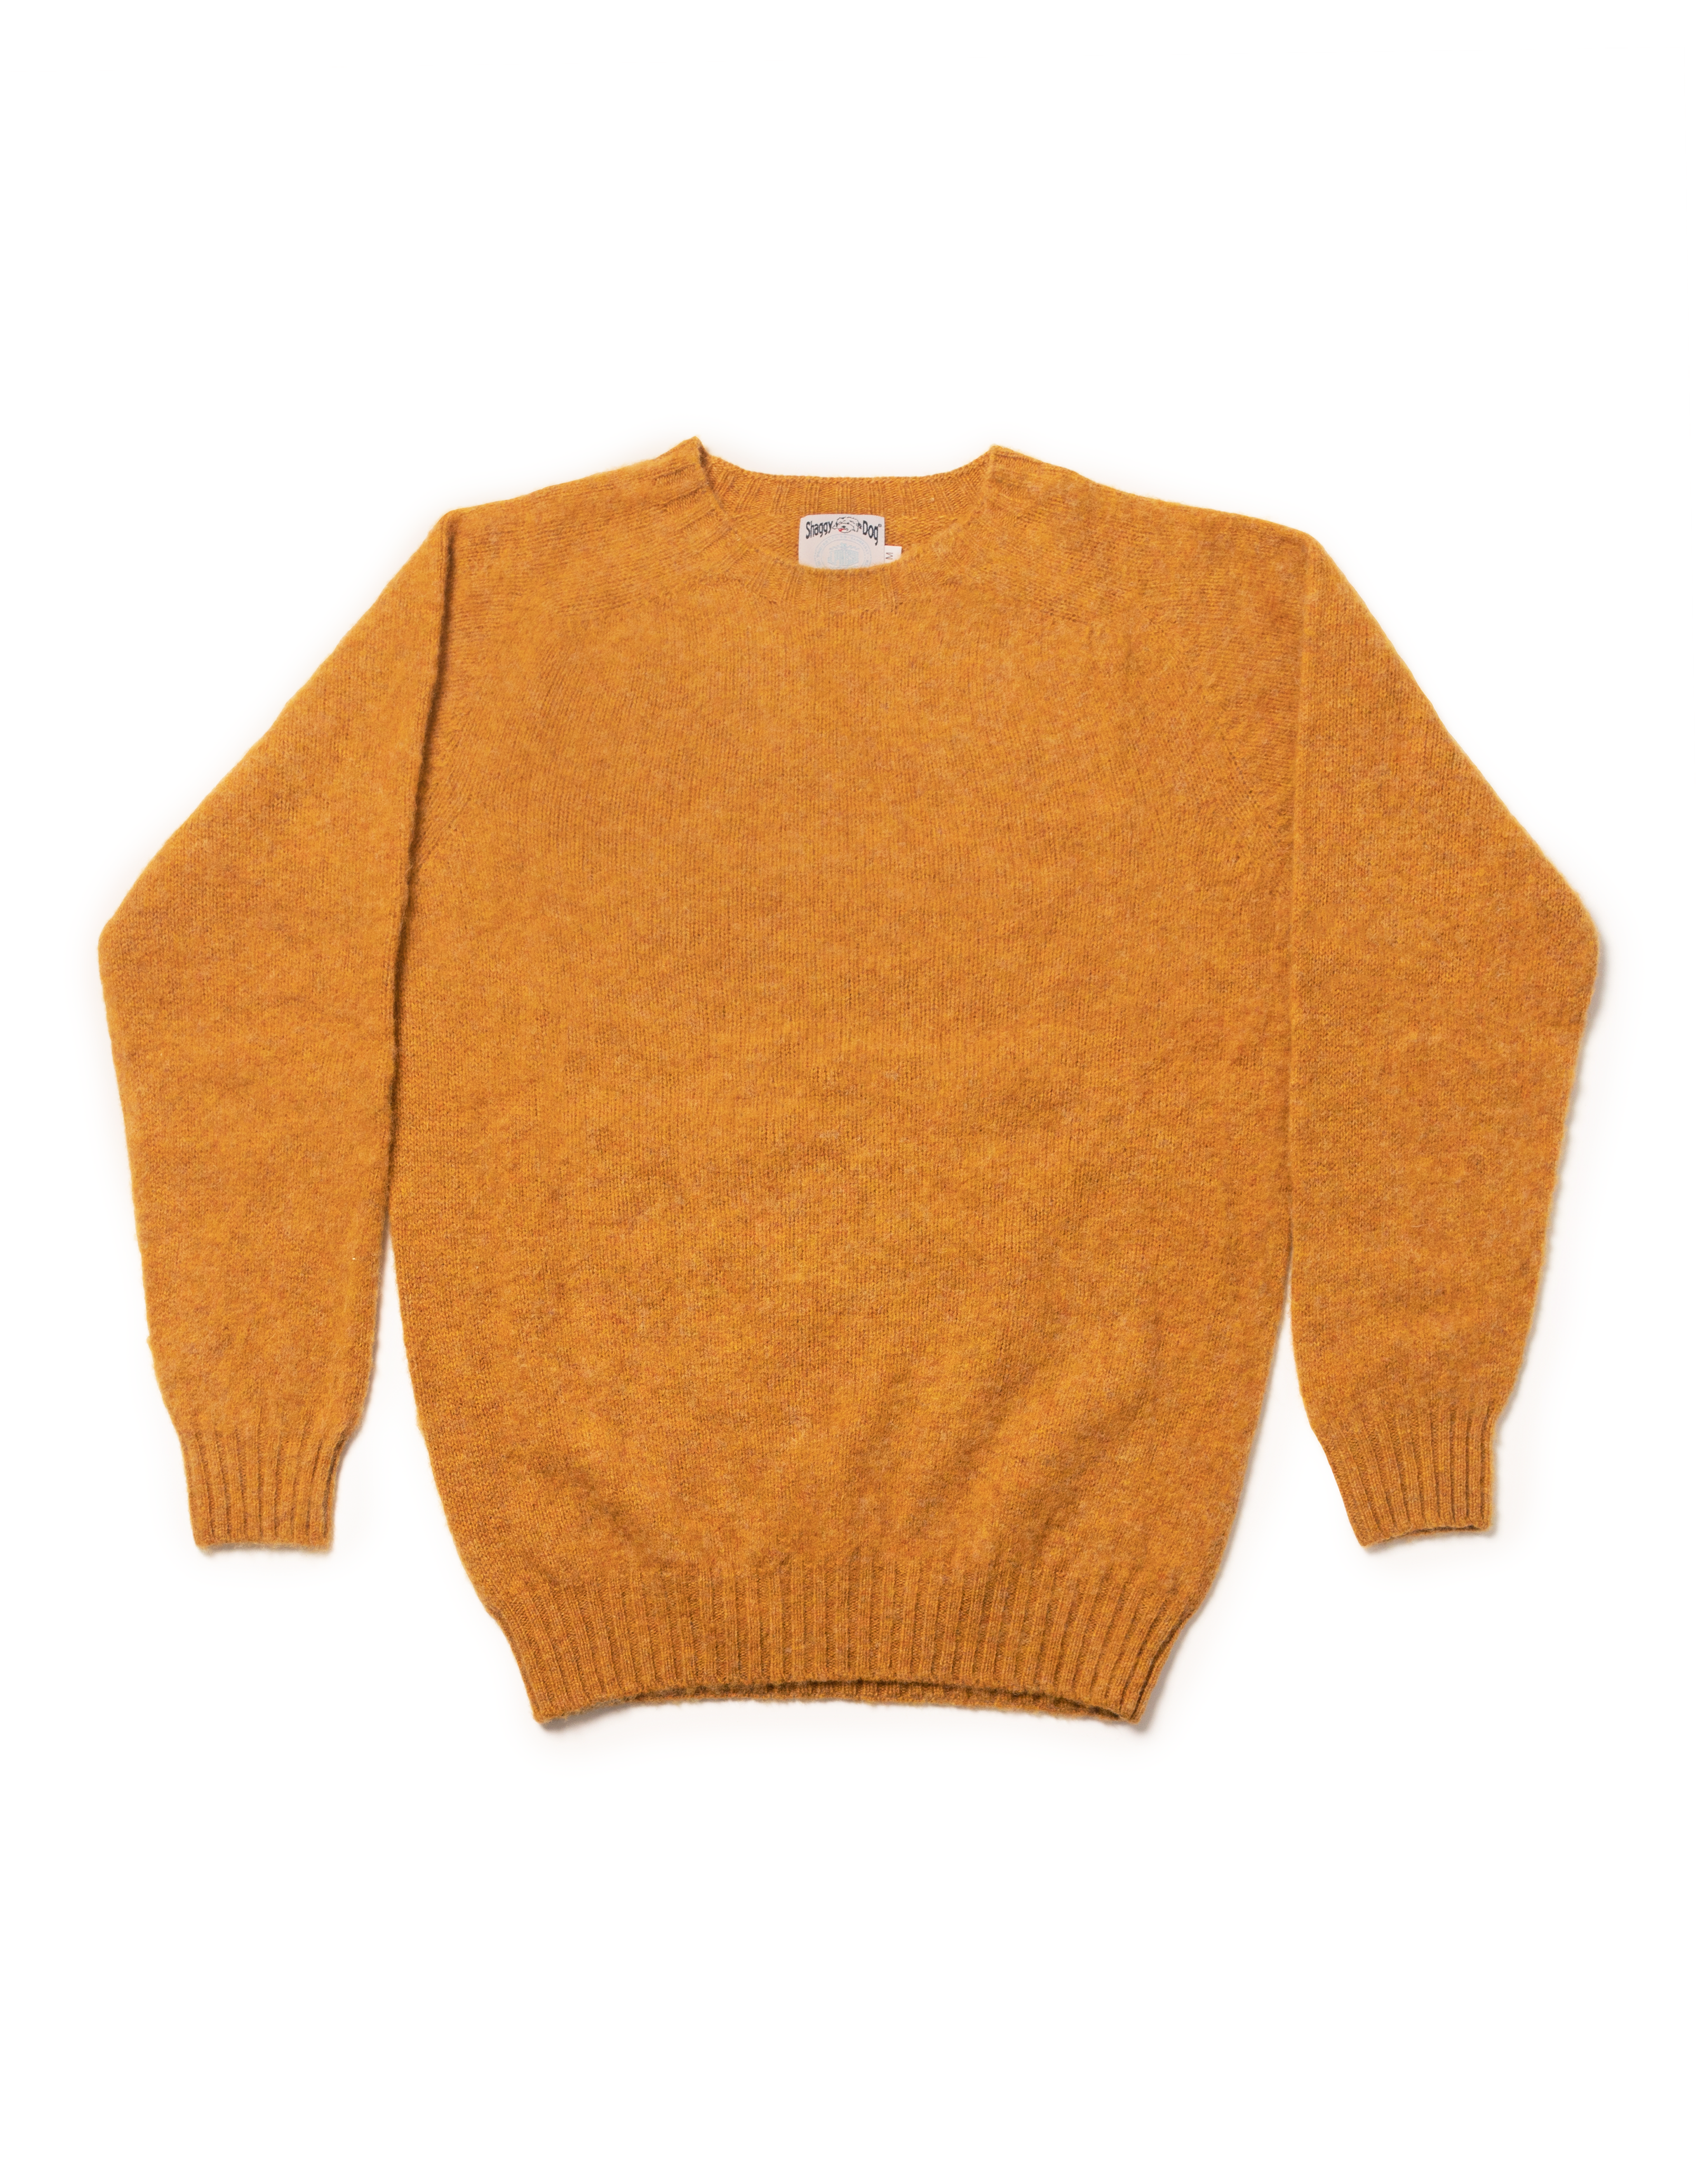 Shaggy Dog Sweater Yellow Mix - Trim Fit | Men's Sweaters - J. Press